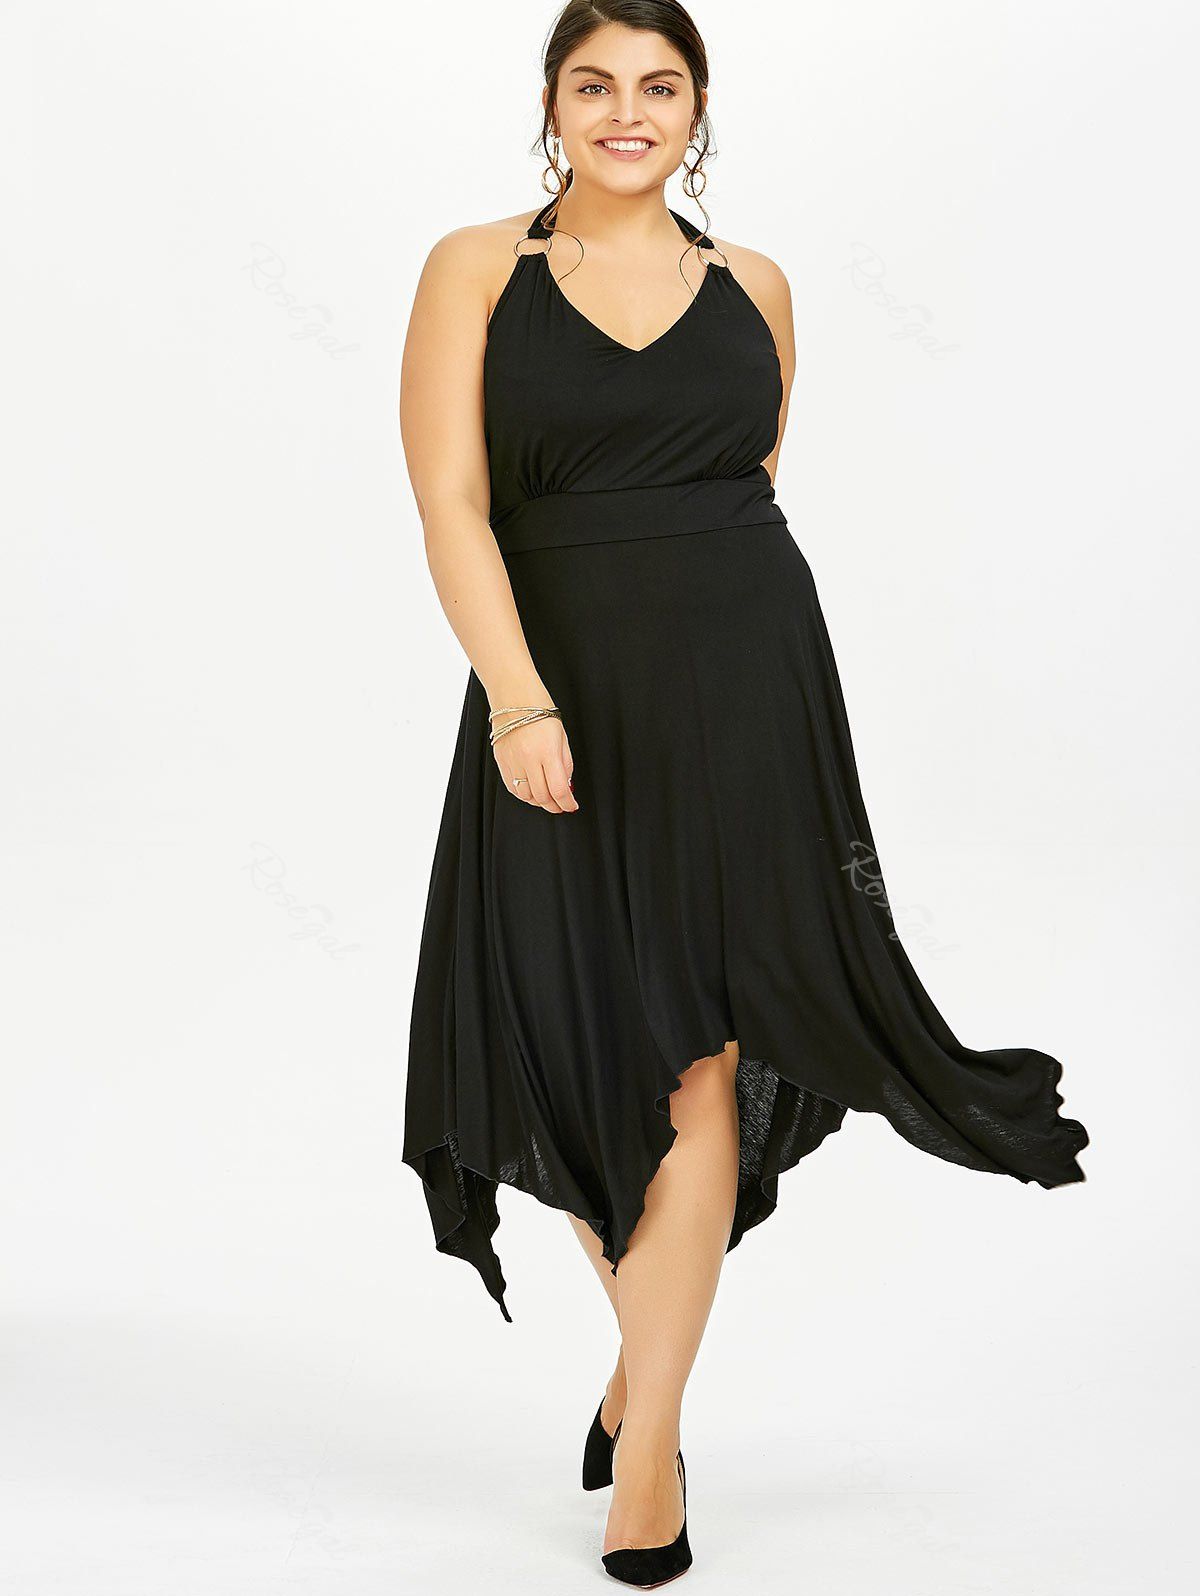 Black halter dress plus size chart – Plus Size Dresses – Dressbarn ...